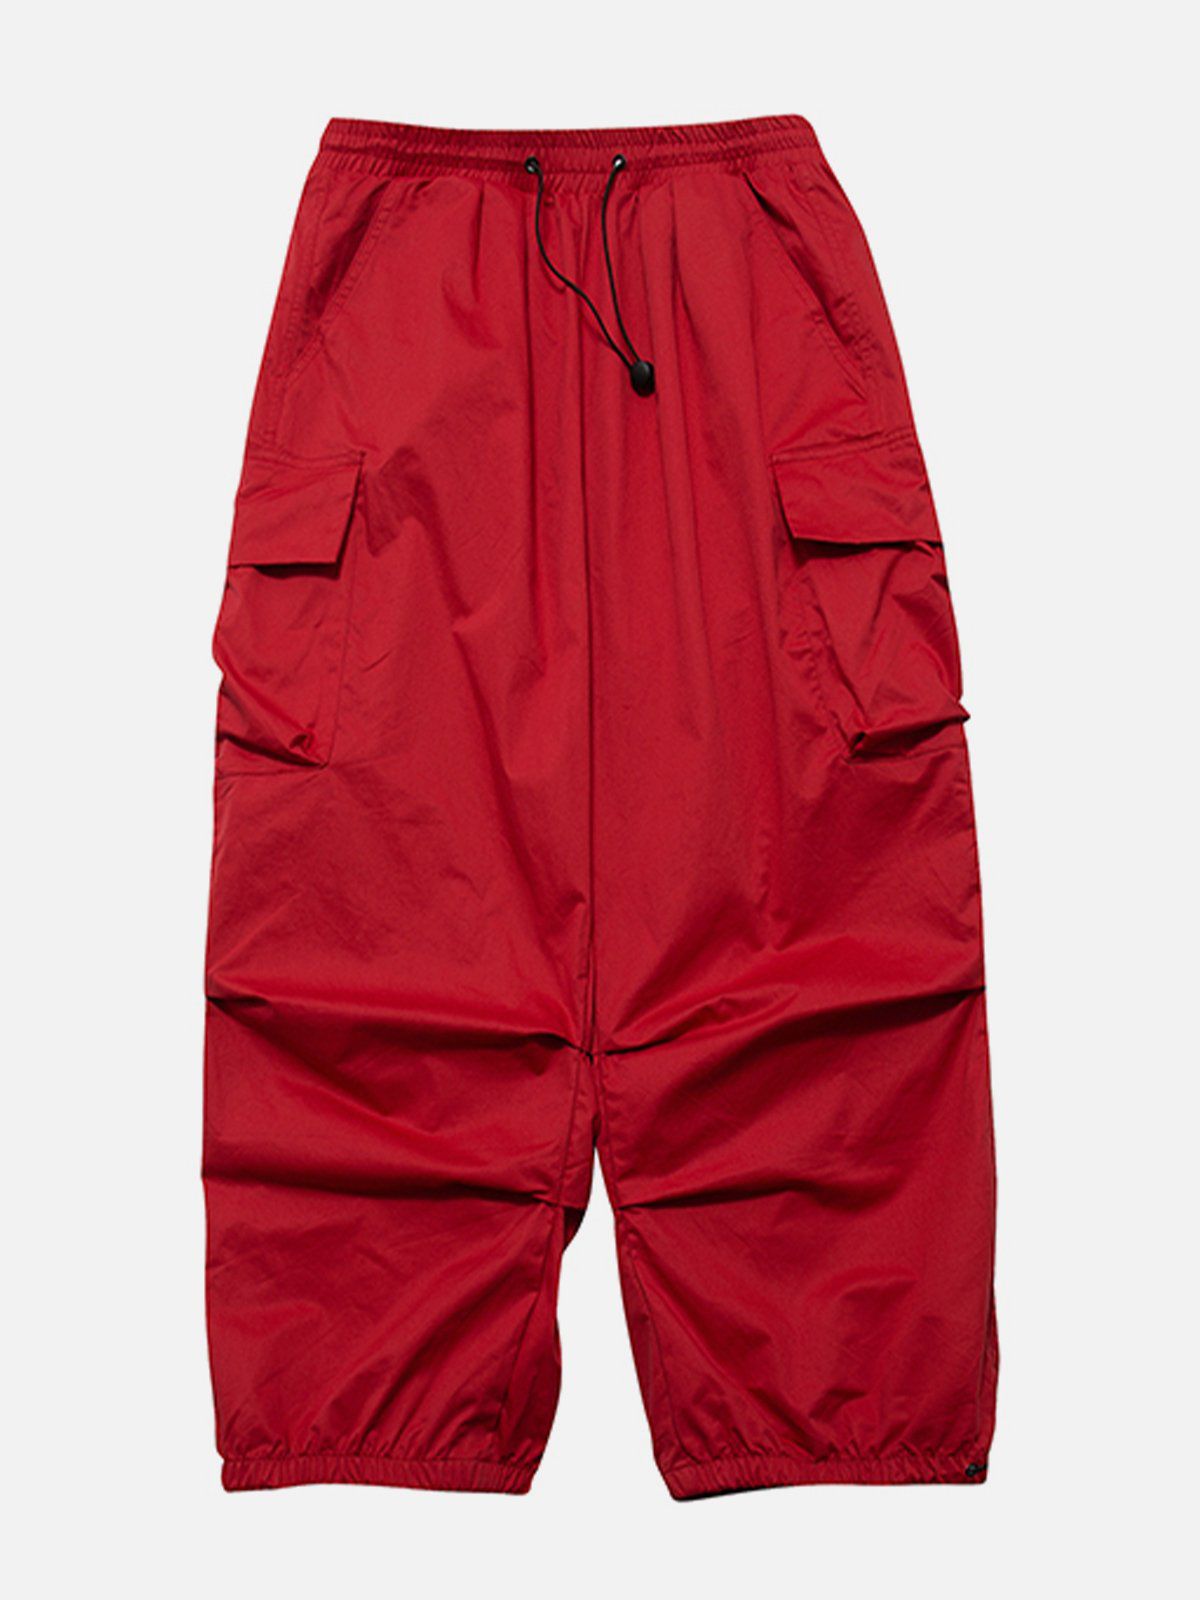 Majesda® - Multi-pocket Adjustable Drawstring Cargo Pants outfit ideas streetwear fashion